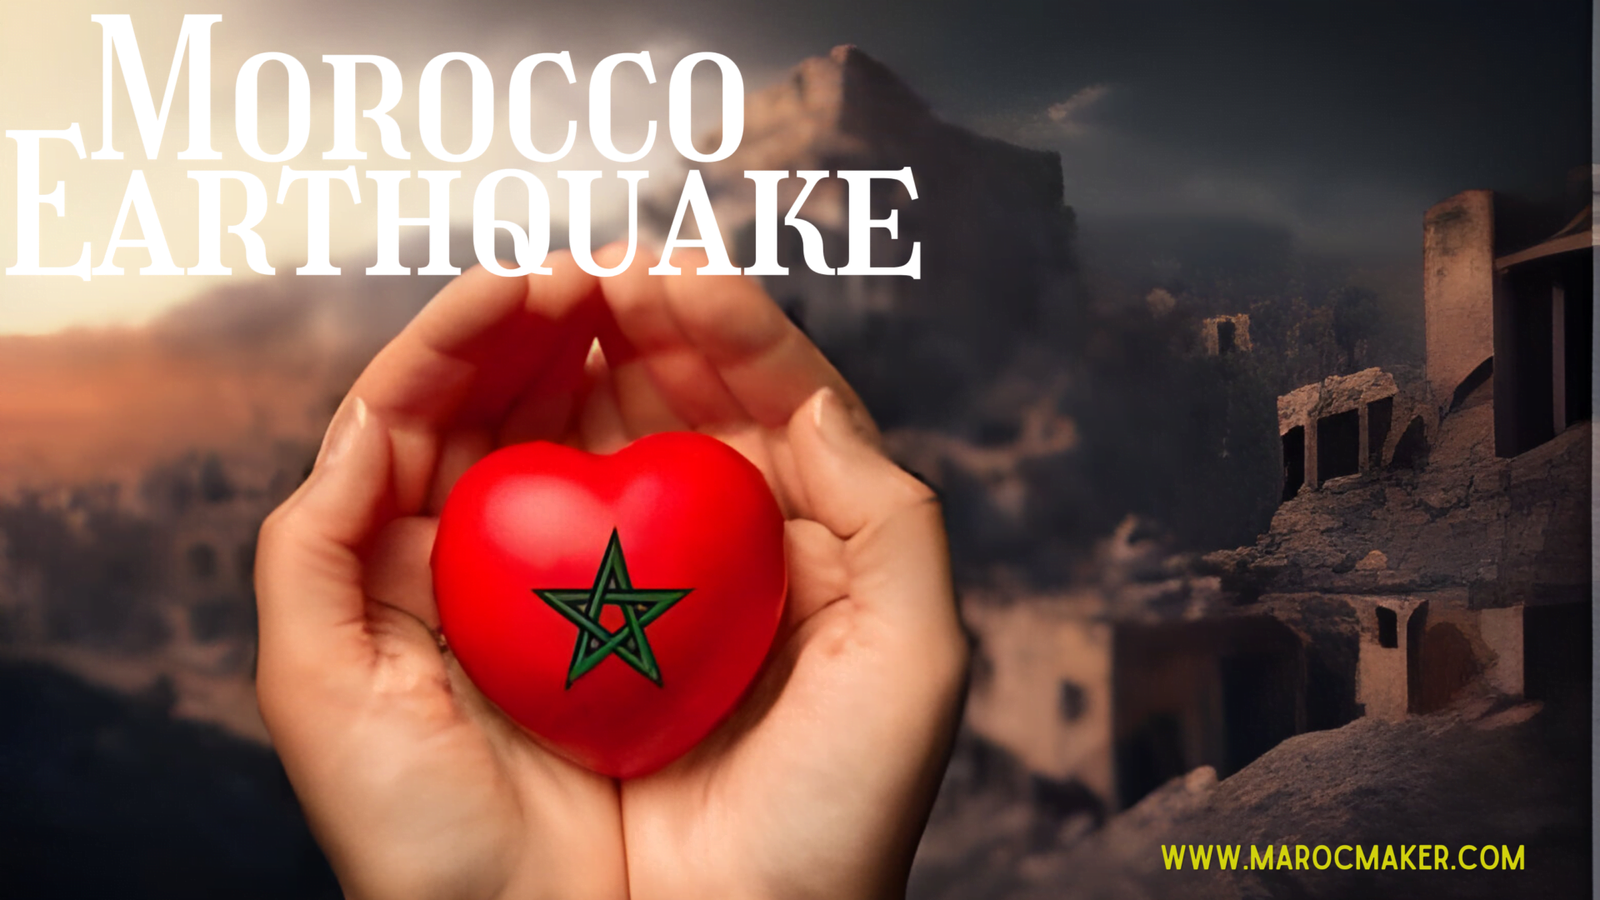 séisme maroc morocco earthquake website